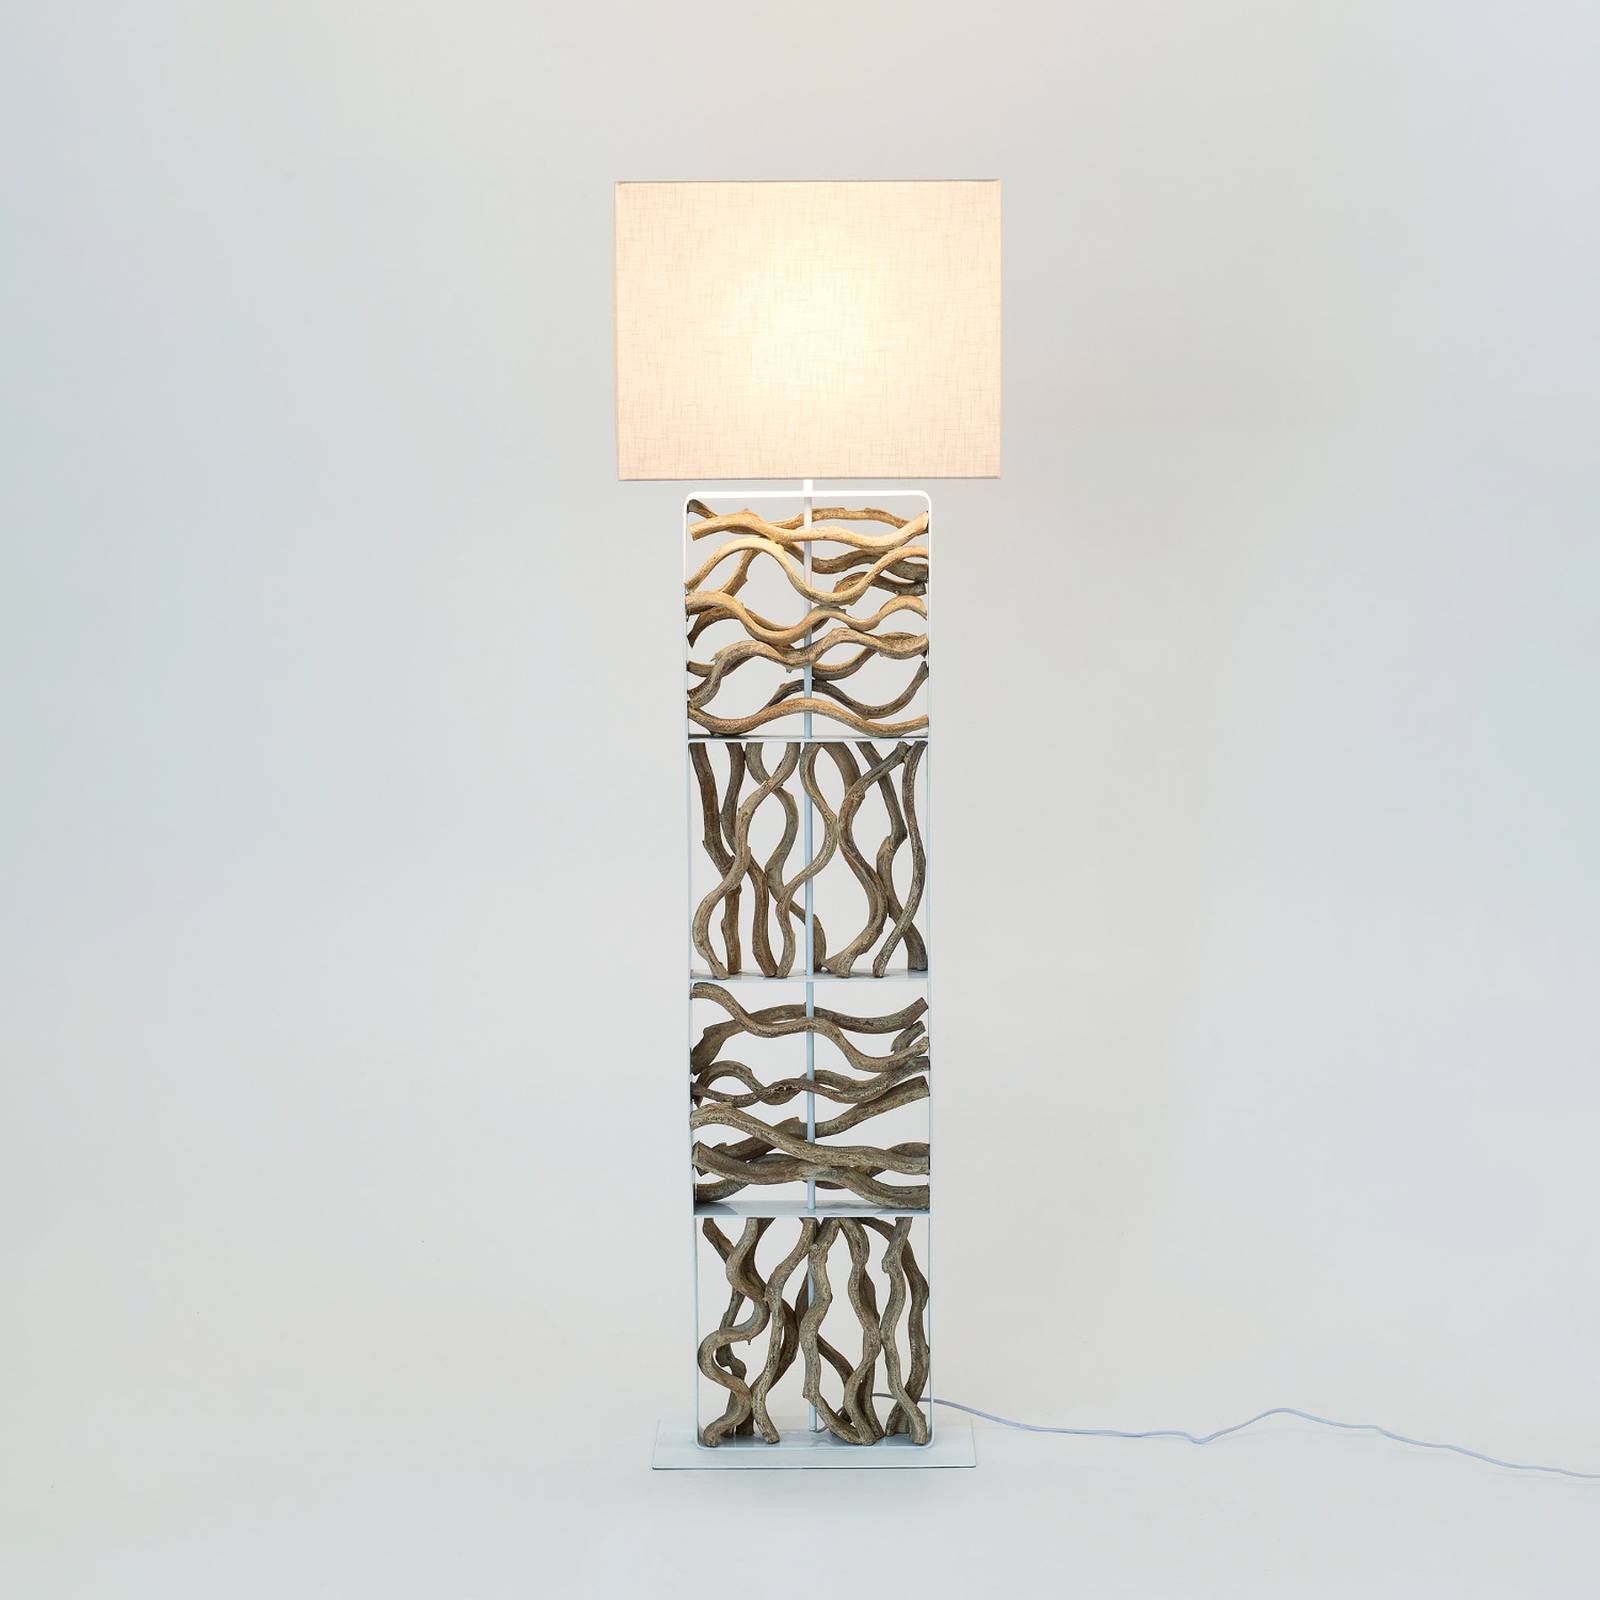 Holländer tremiti állólámpa, fa színű/bézs, magasság 160 cm, fa